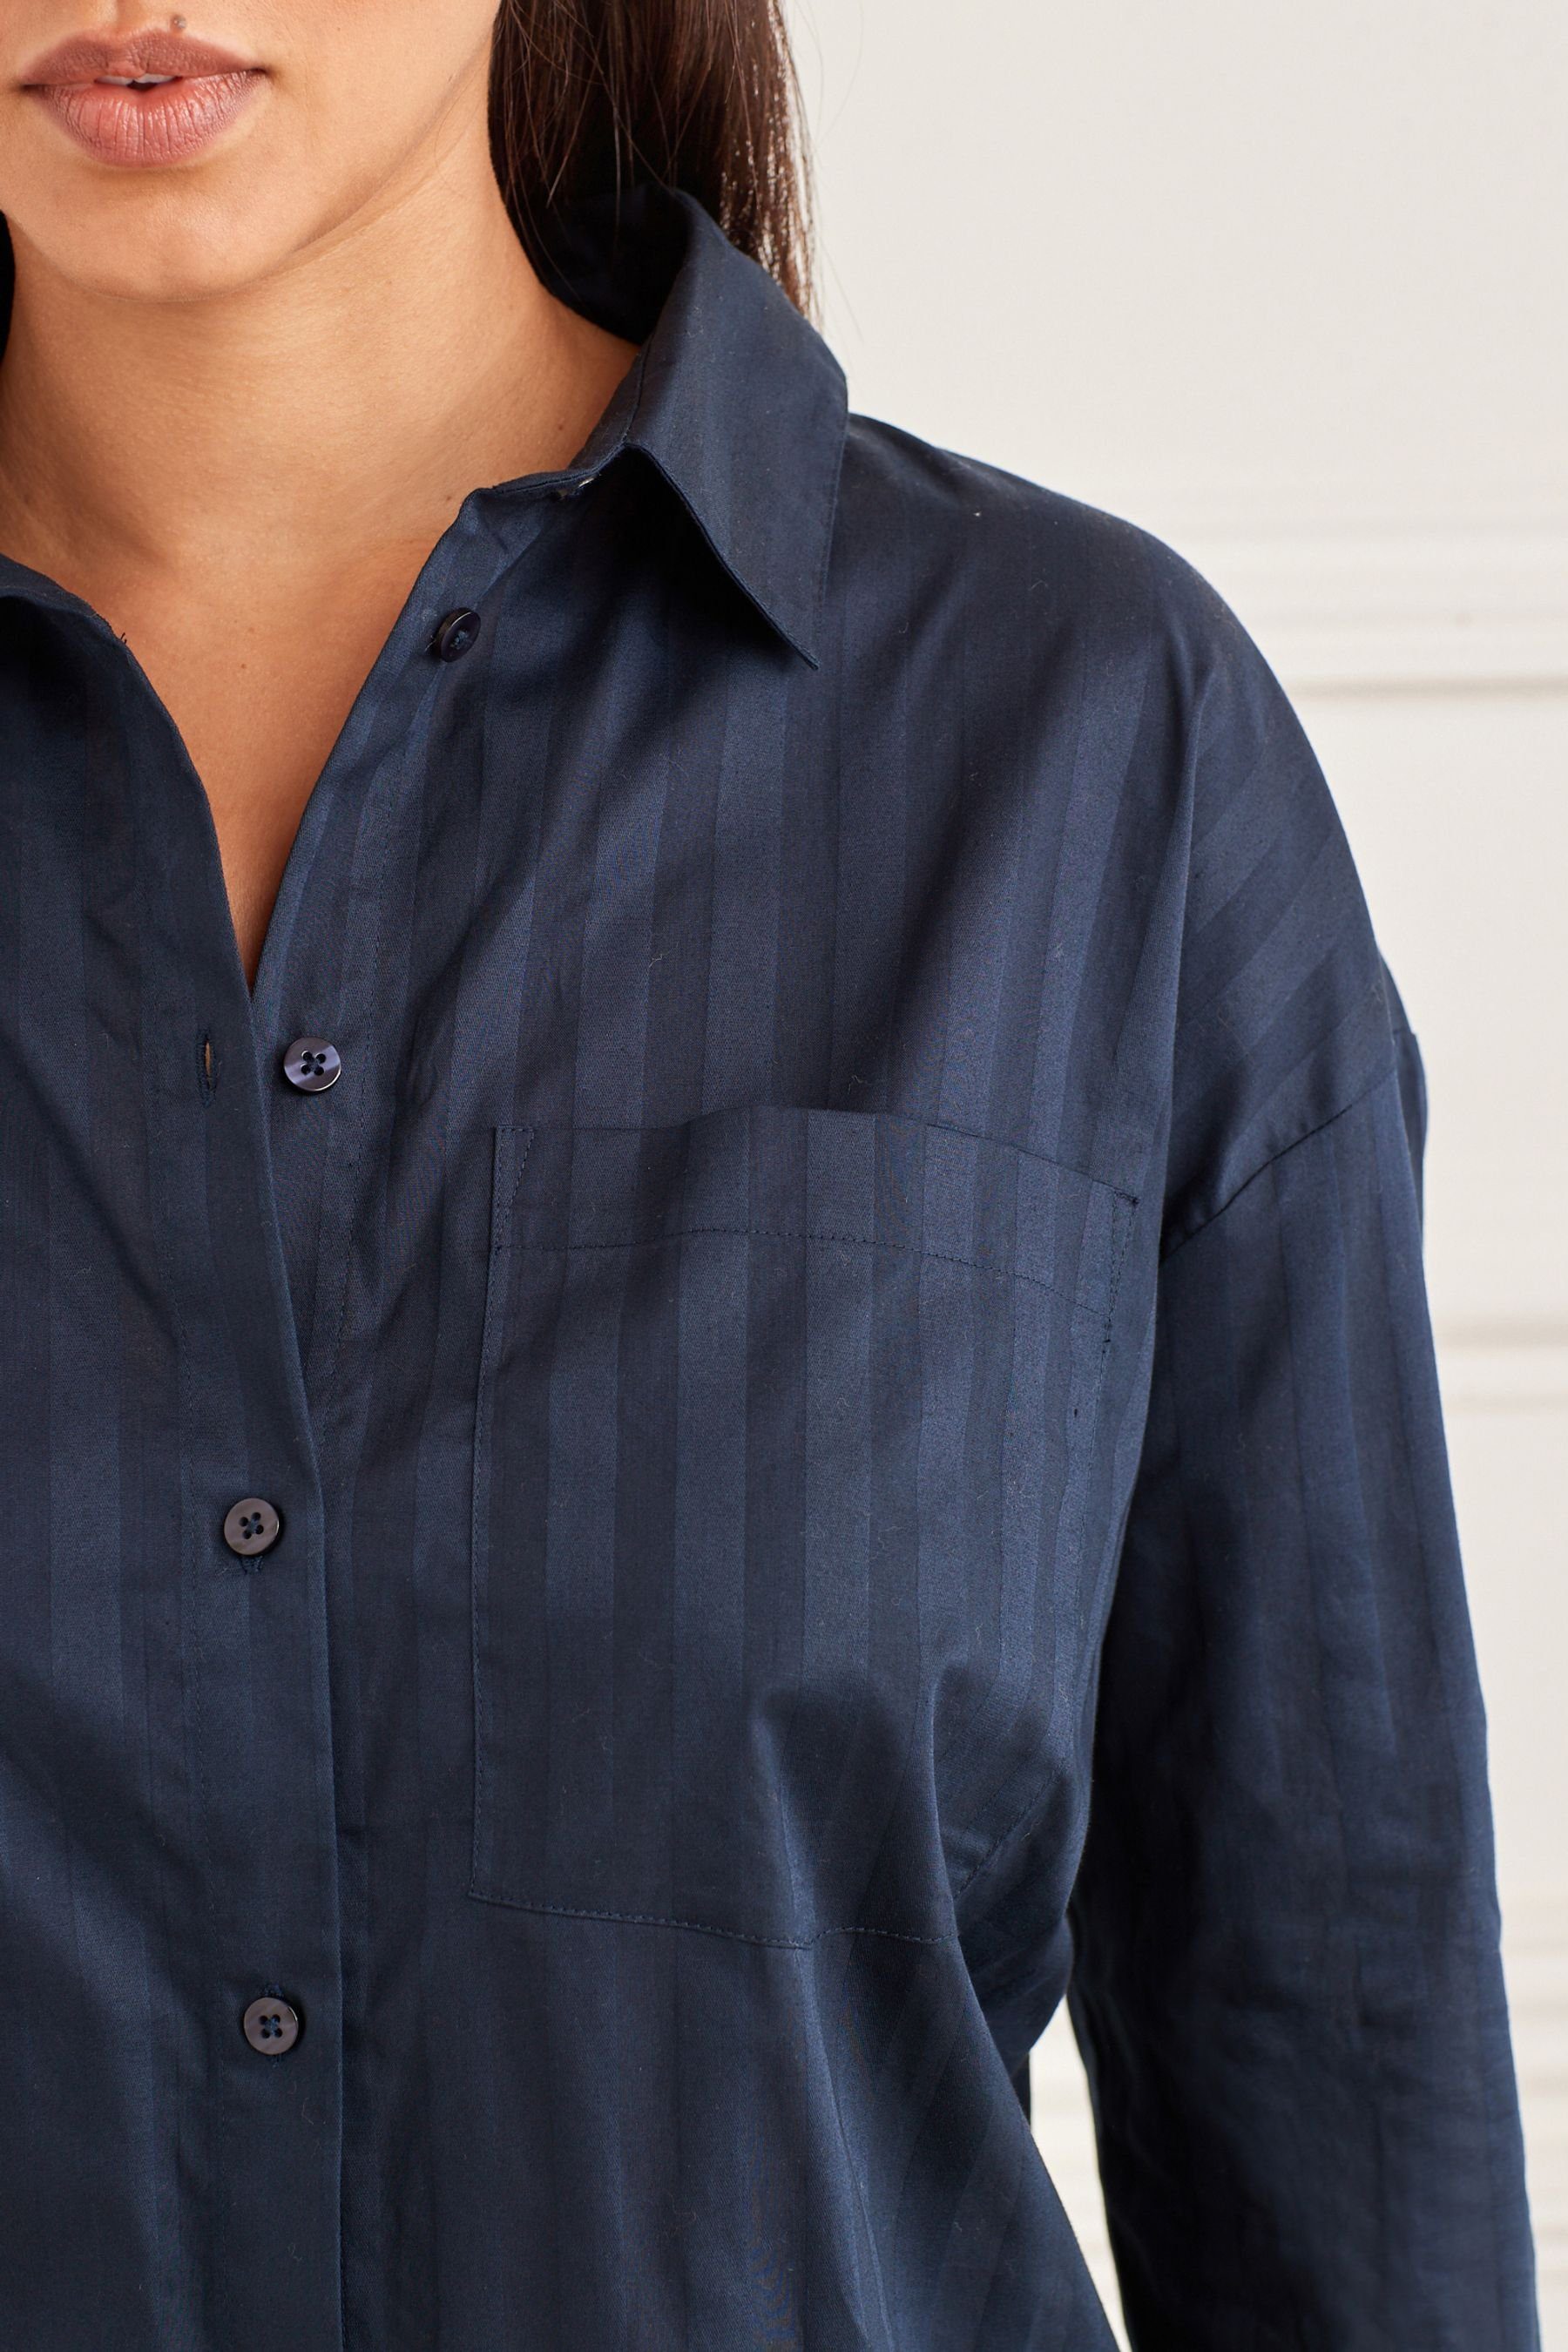 Next Pyjama tlg) Navy (2 Luxe Baumwolle Pyjama-Set Premium Blue aus